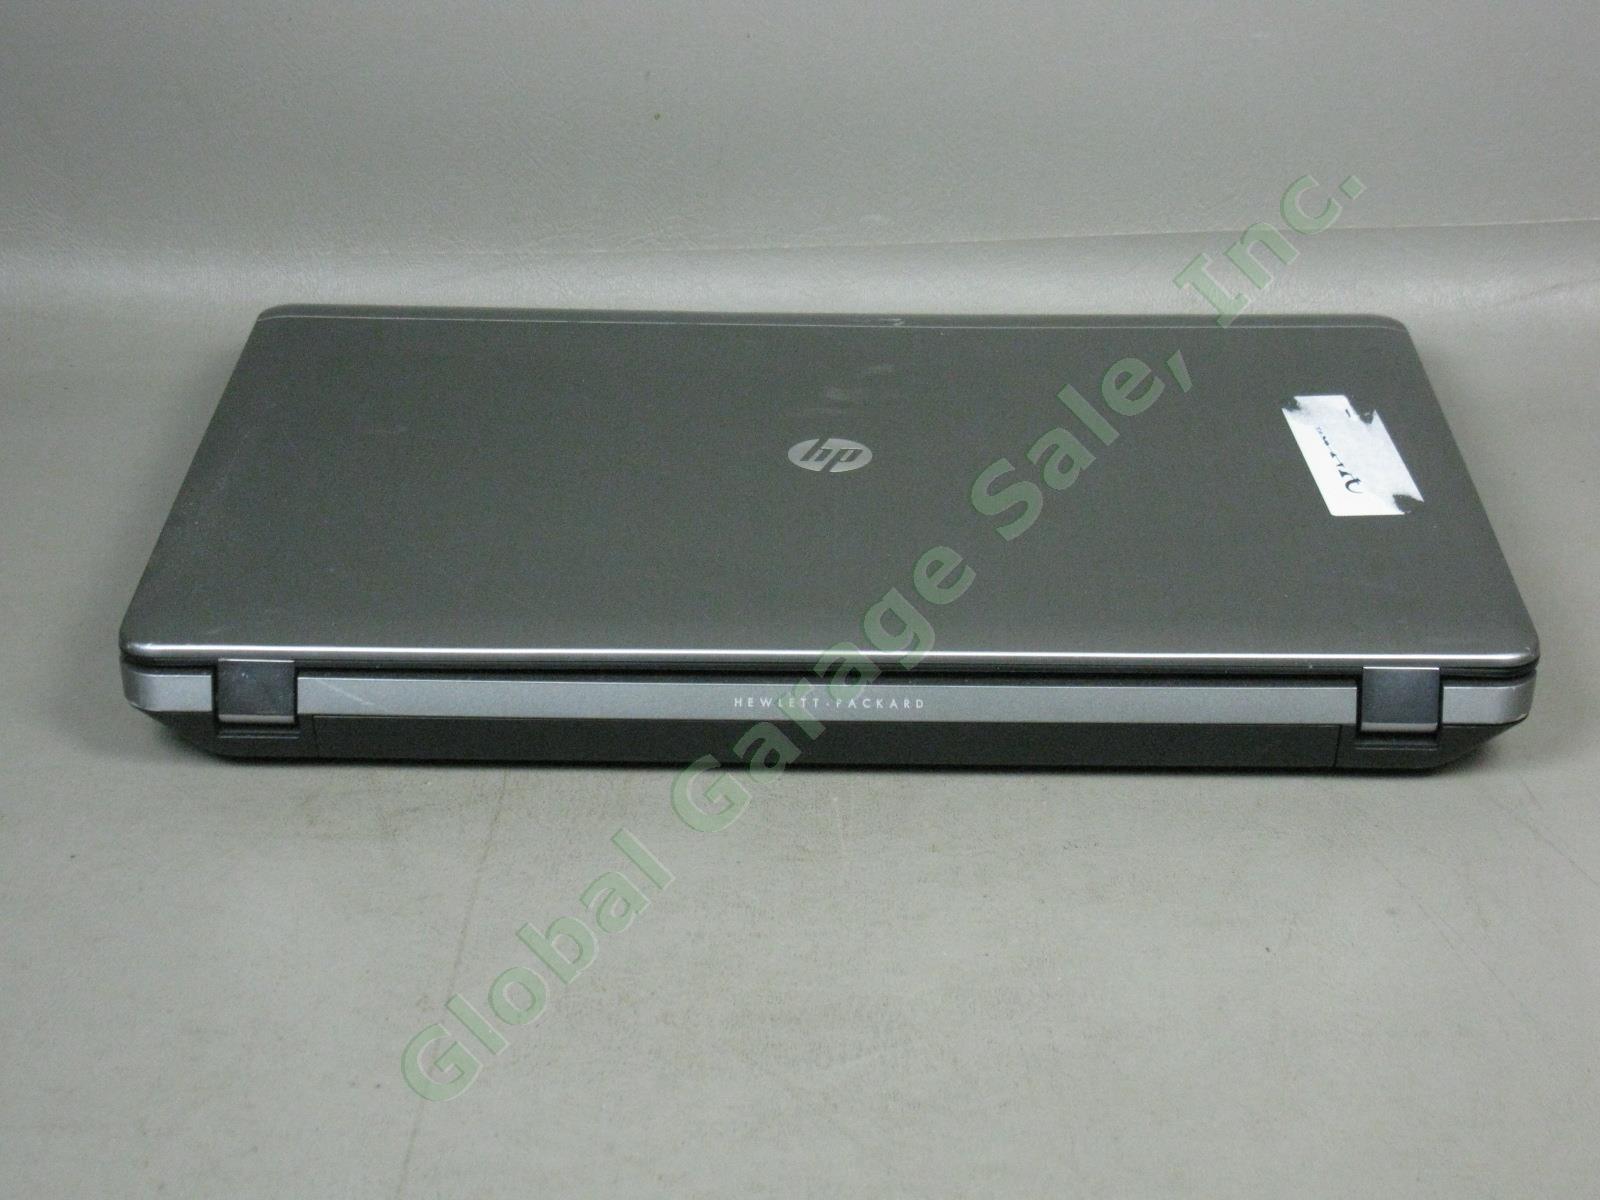 HP ProBook 4540s Laptop Computer Intel i5 2.60GHz 300GB HDD 4GB RAM Win 10 Pro 5